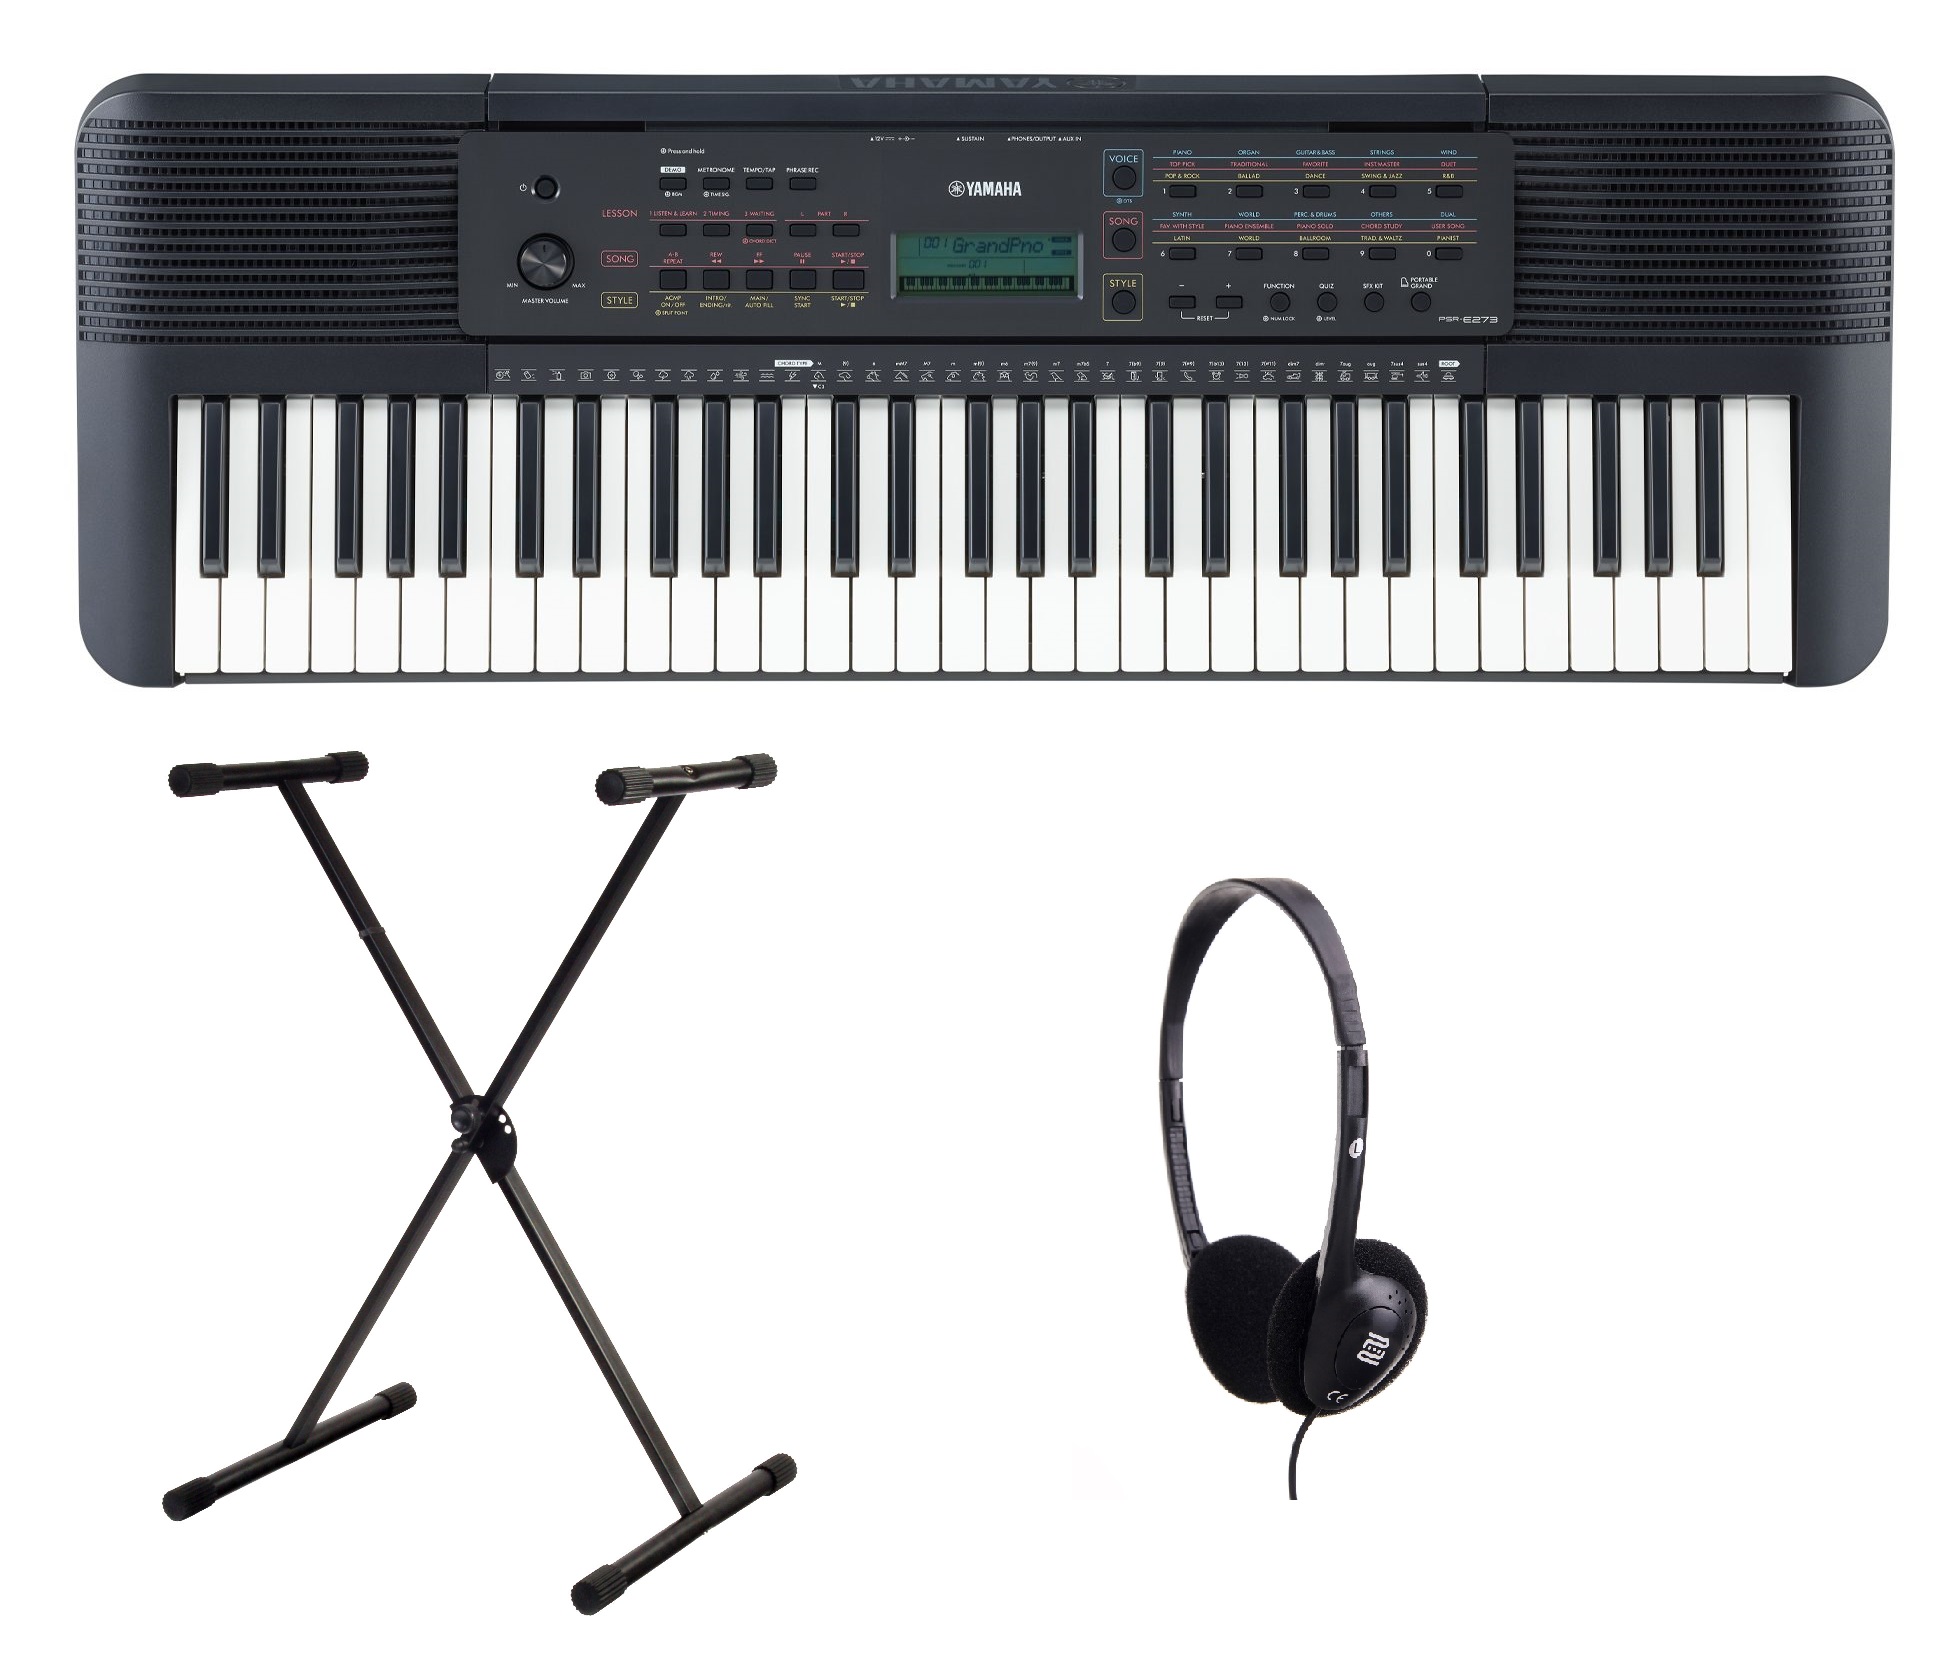 PSR-E273 Set mit Keyboardständer, Kopfhörer